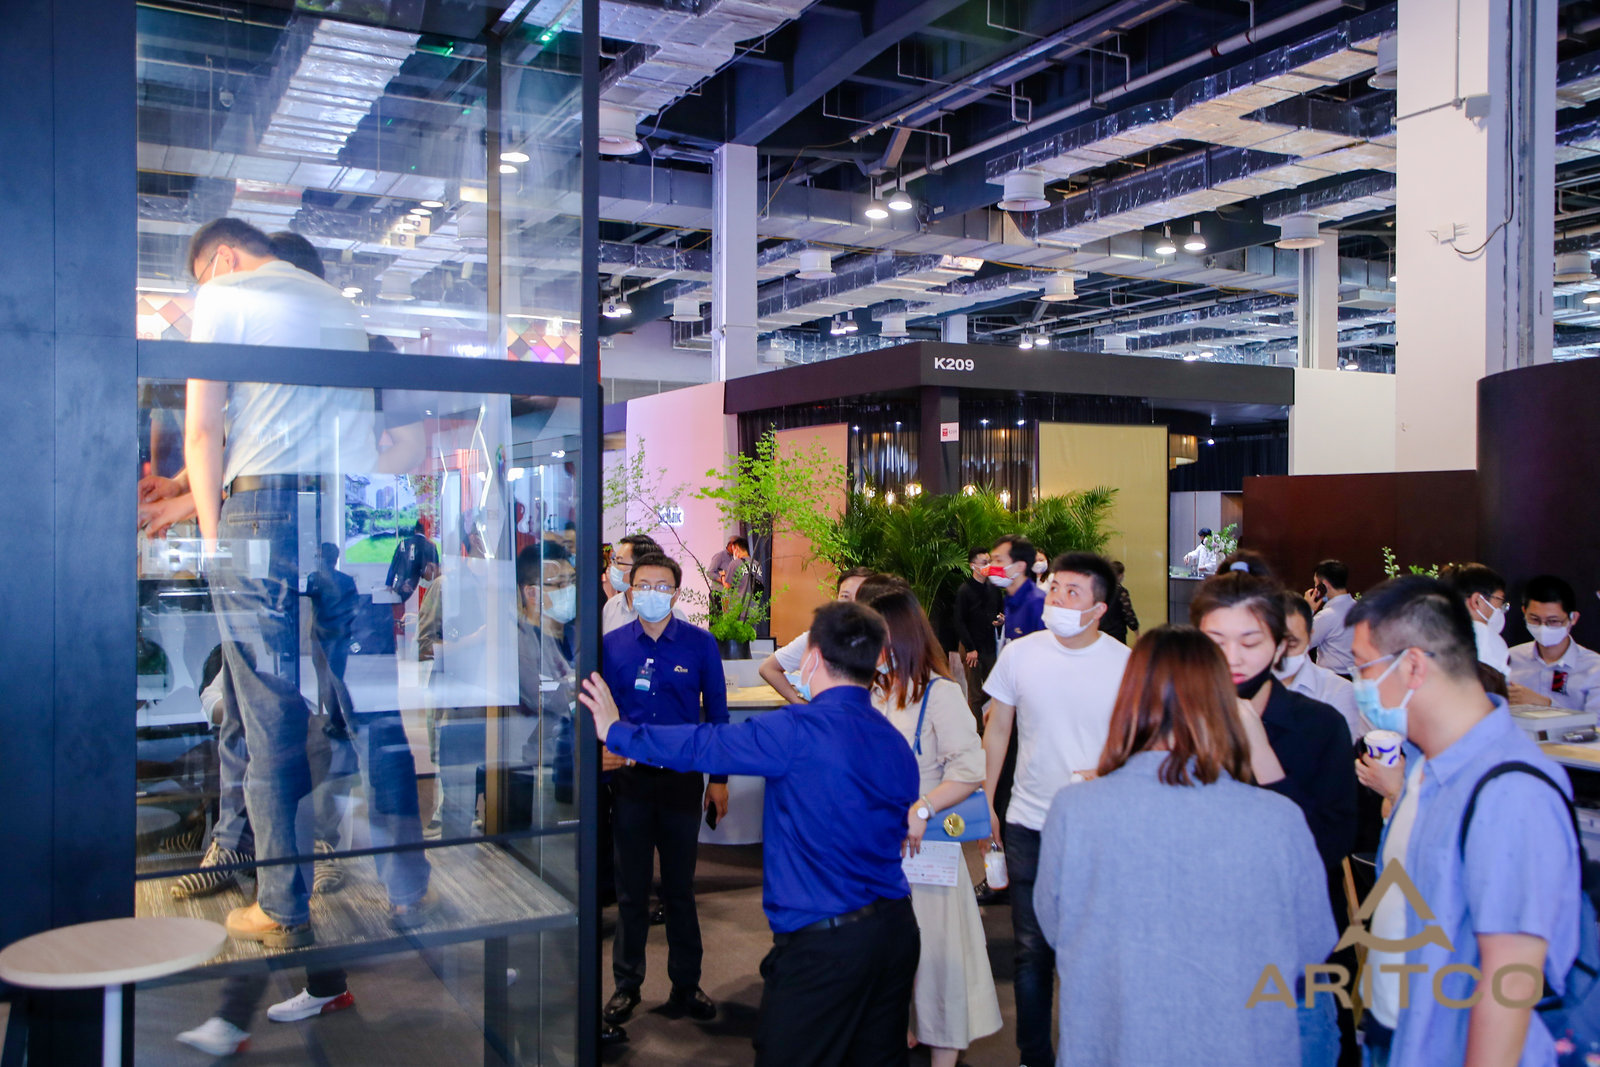 Visitors at Design Shanghai 2021 in the Aritco counter 